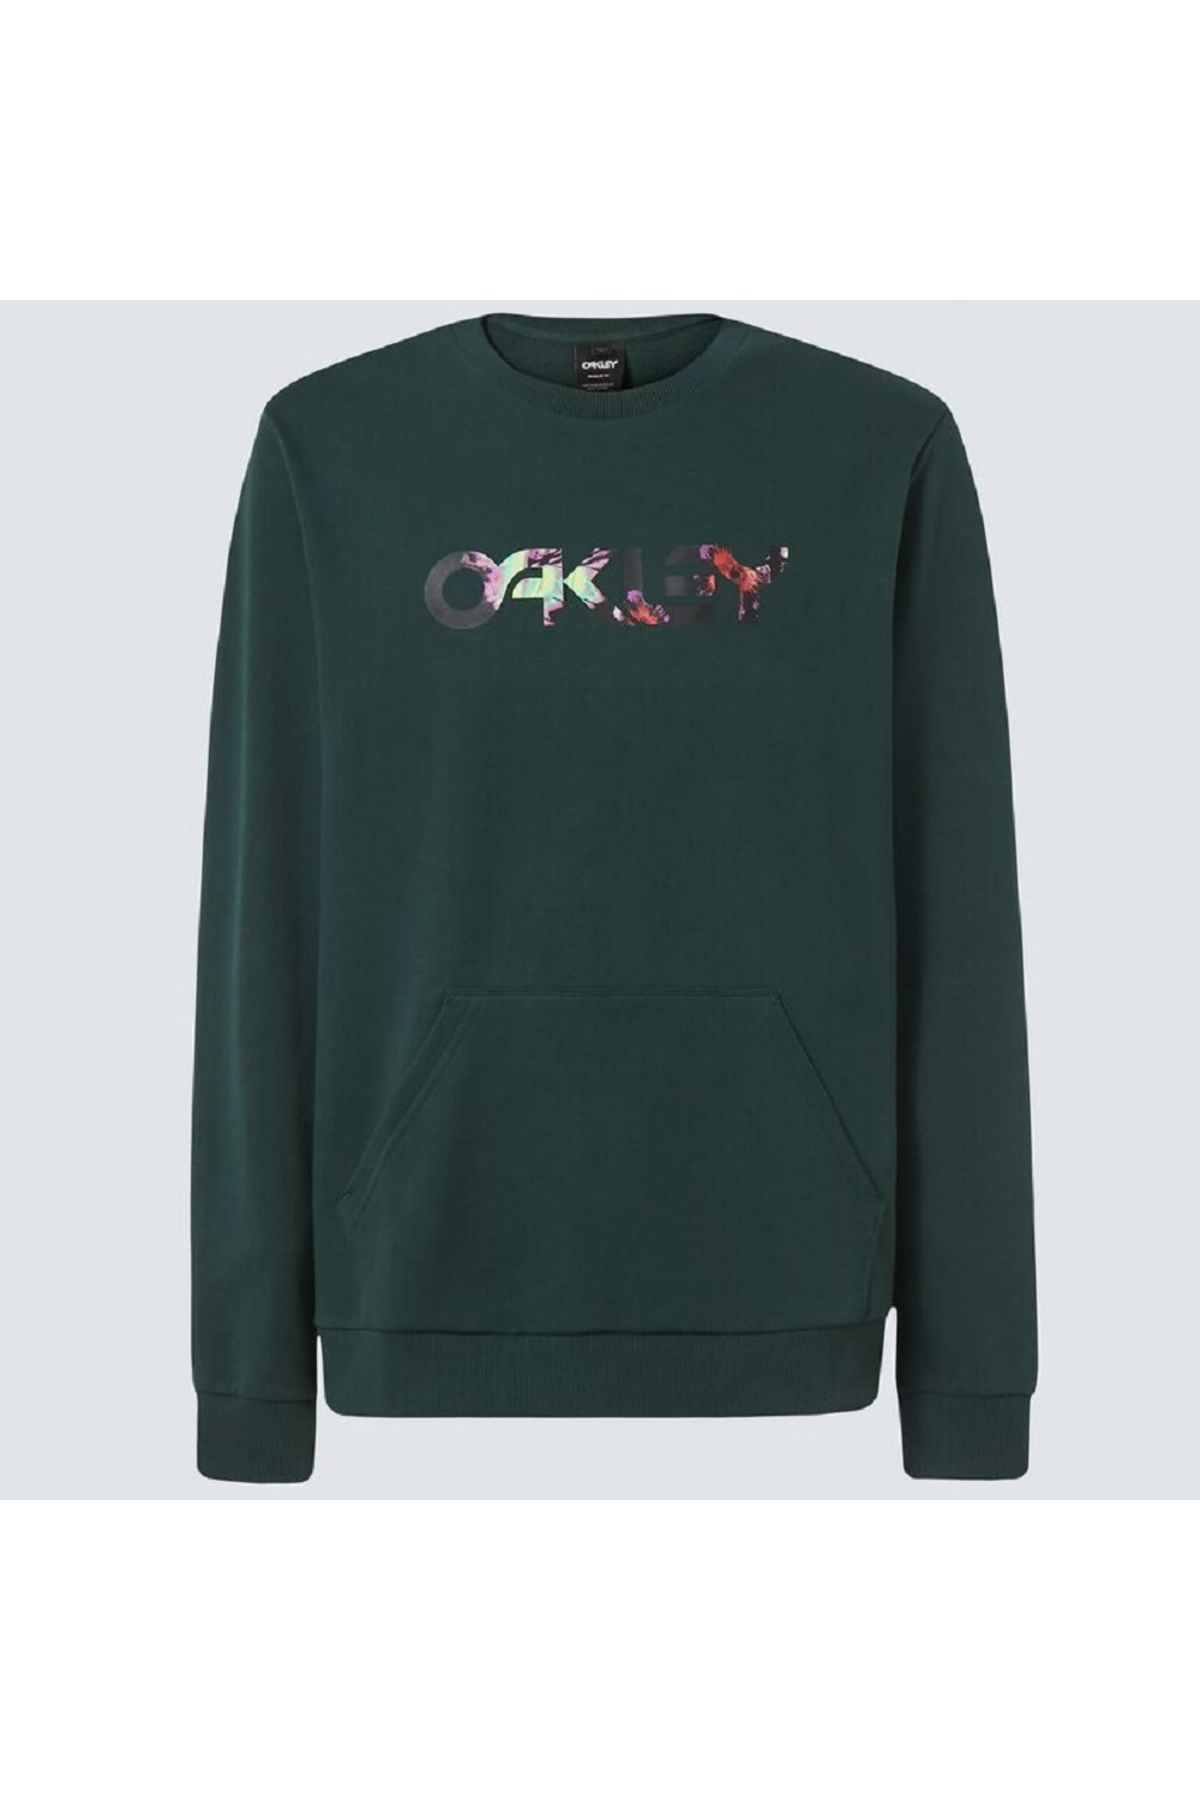 Oakley Floral Splash B1b Crew Unisex Sweatshirt